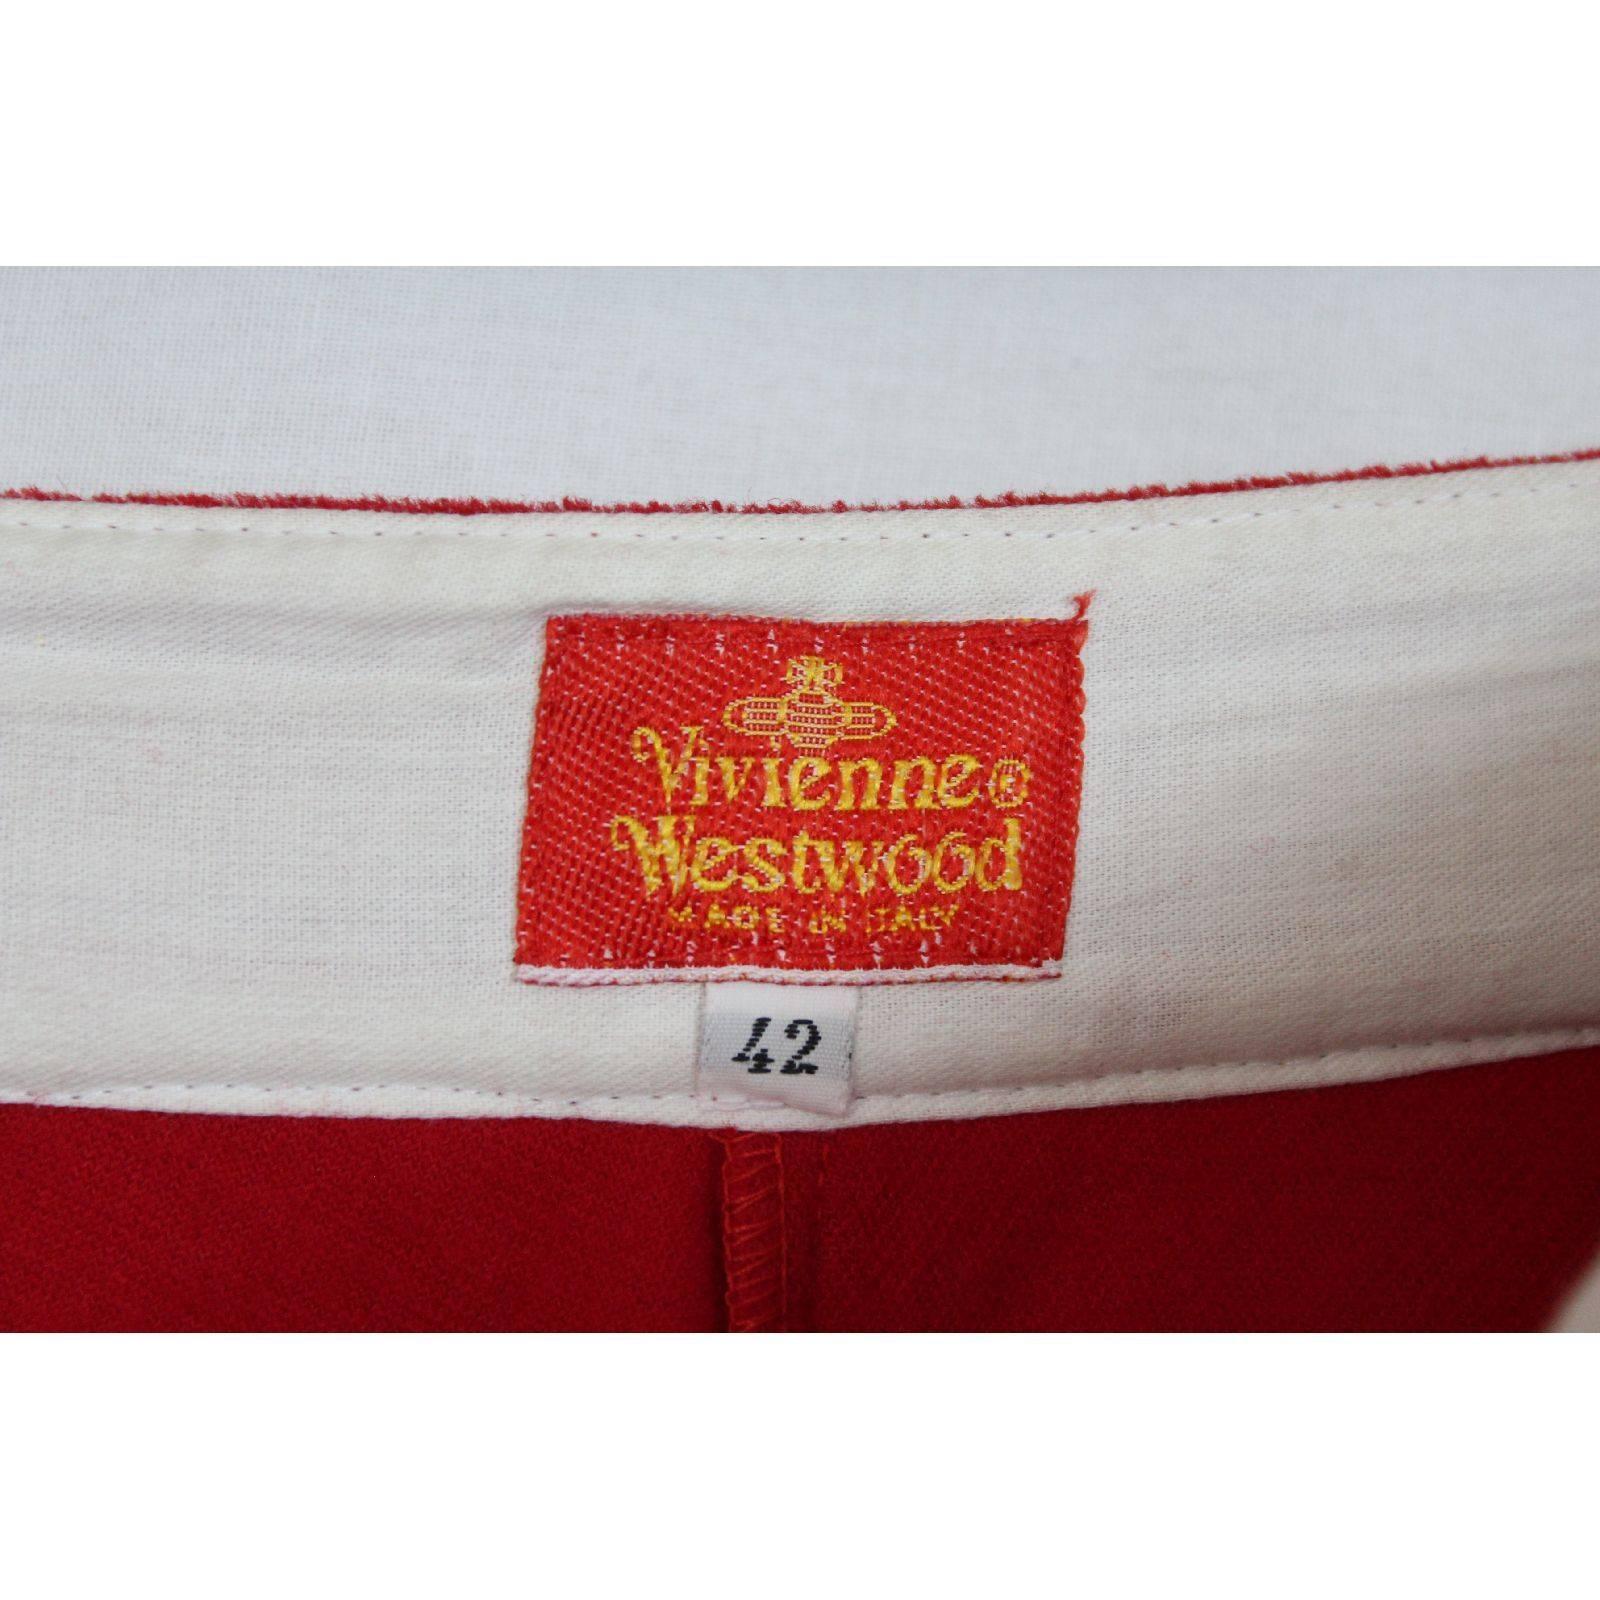 Women's Vivienne Westwood cupro red pants trousers size 42 1990s women's vintage